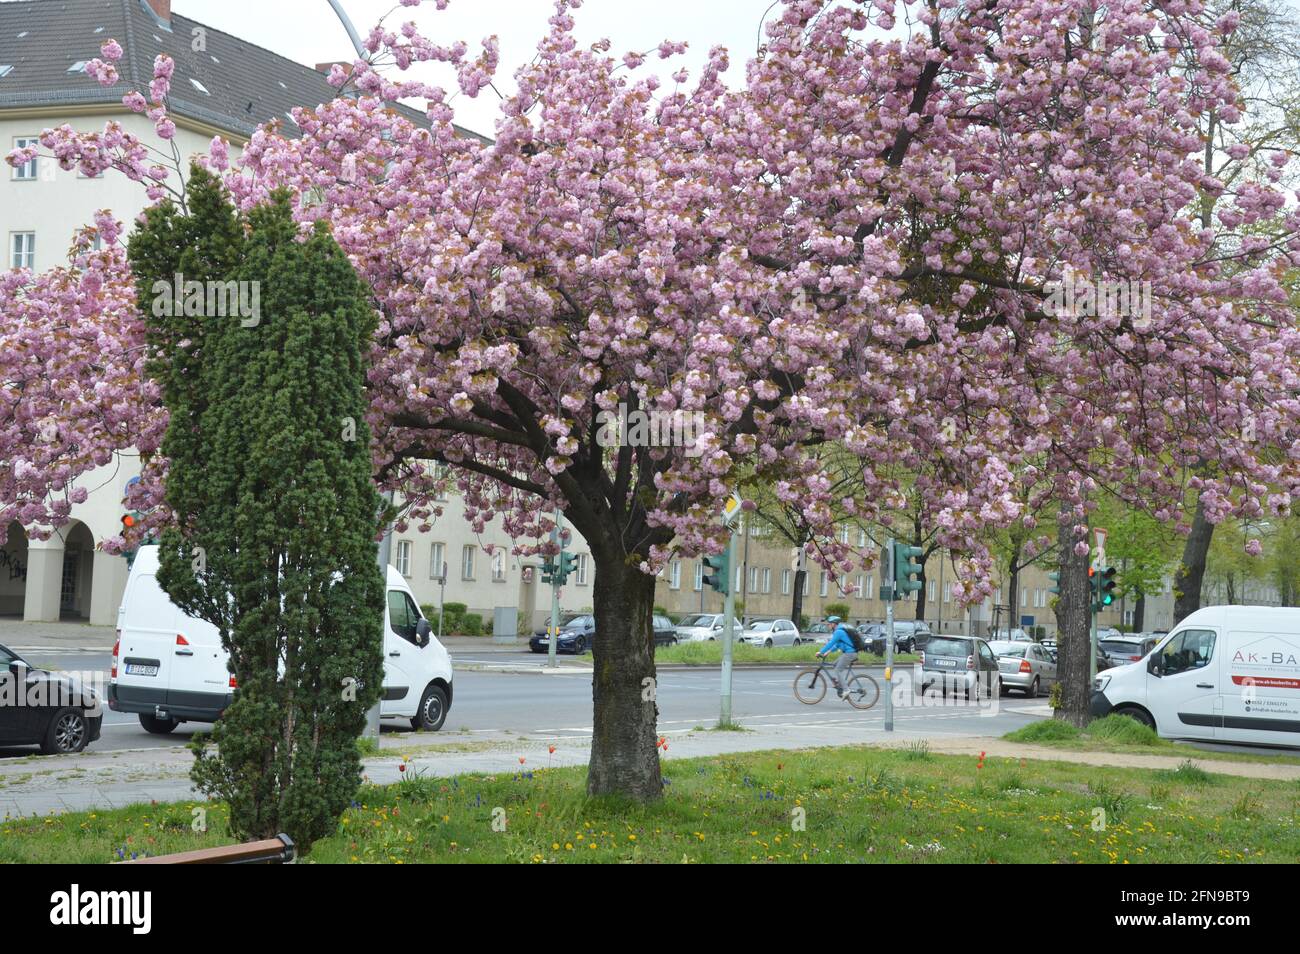 May 2021 - Cherry blossoms at Grazer Platz in Berlin, Germany Stock Photo